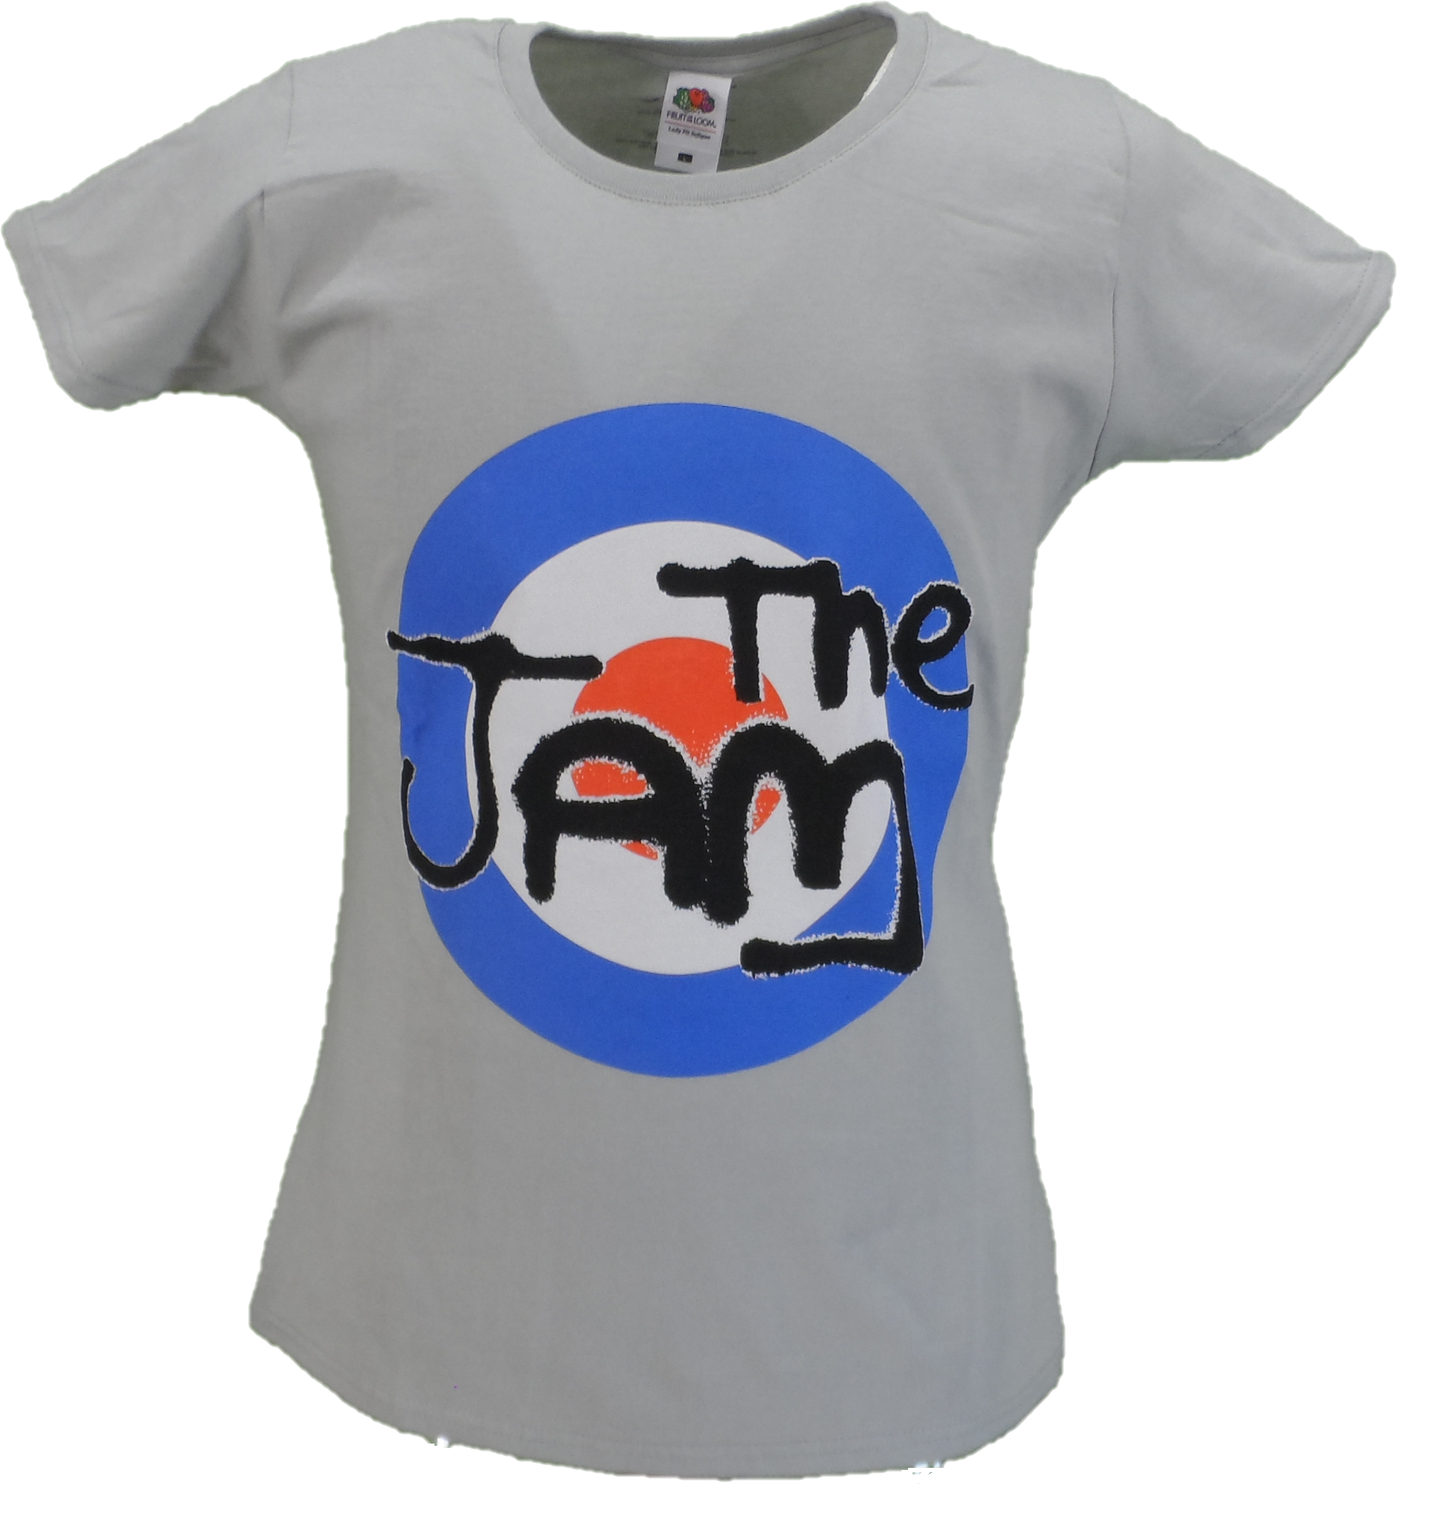 Offiziell lizenzierte graue Ziel-T-Shirts für Damen The Jam